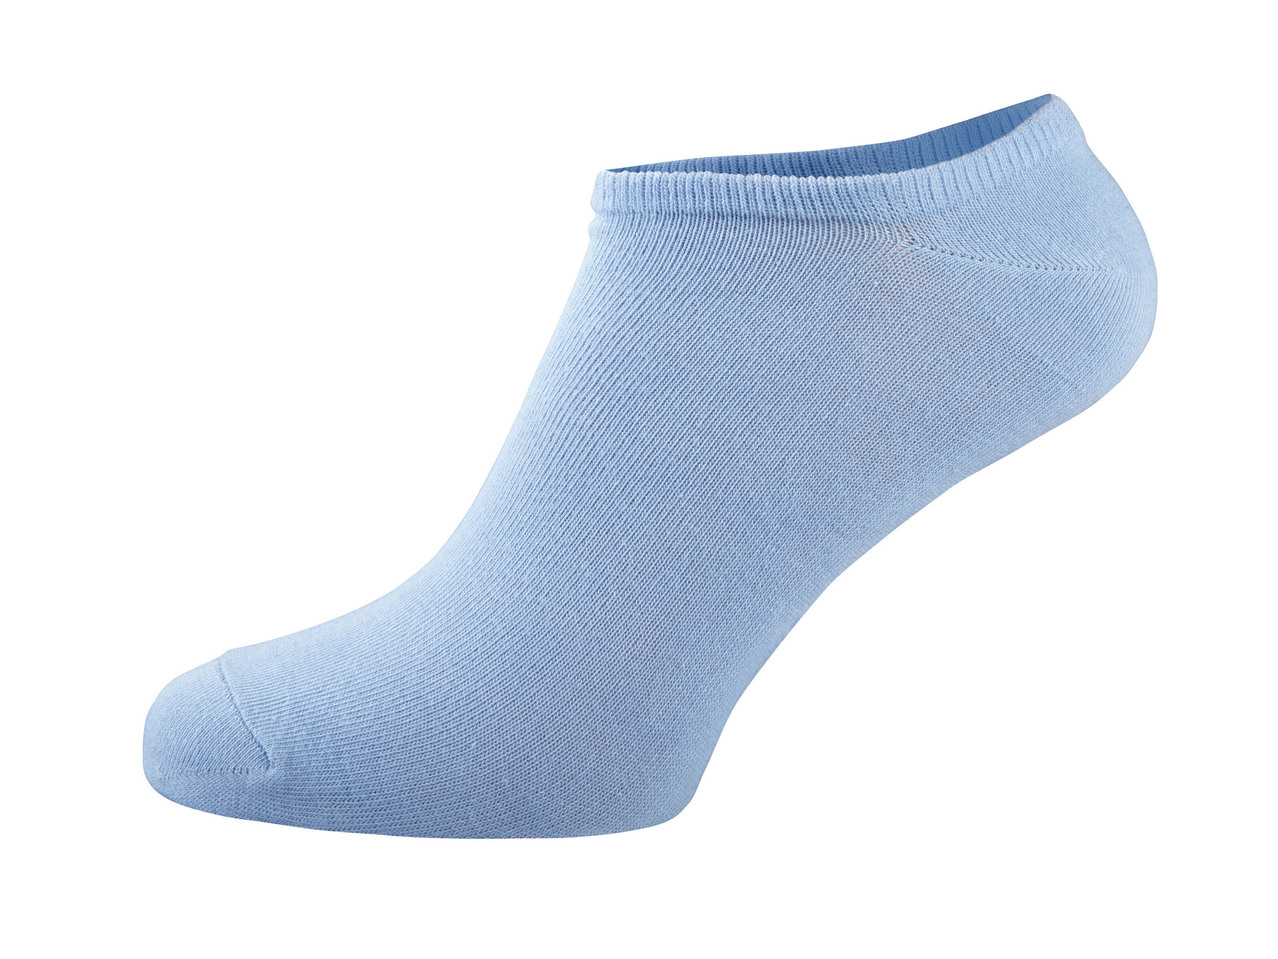 Men's Trainer Socks, 5 pairs